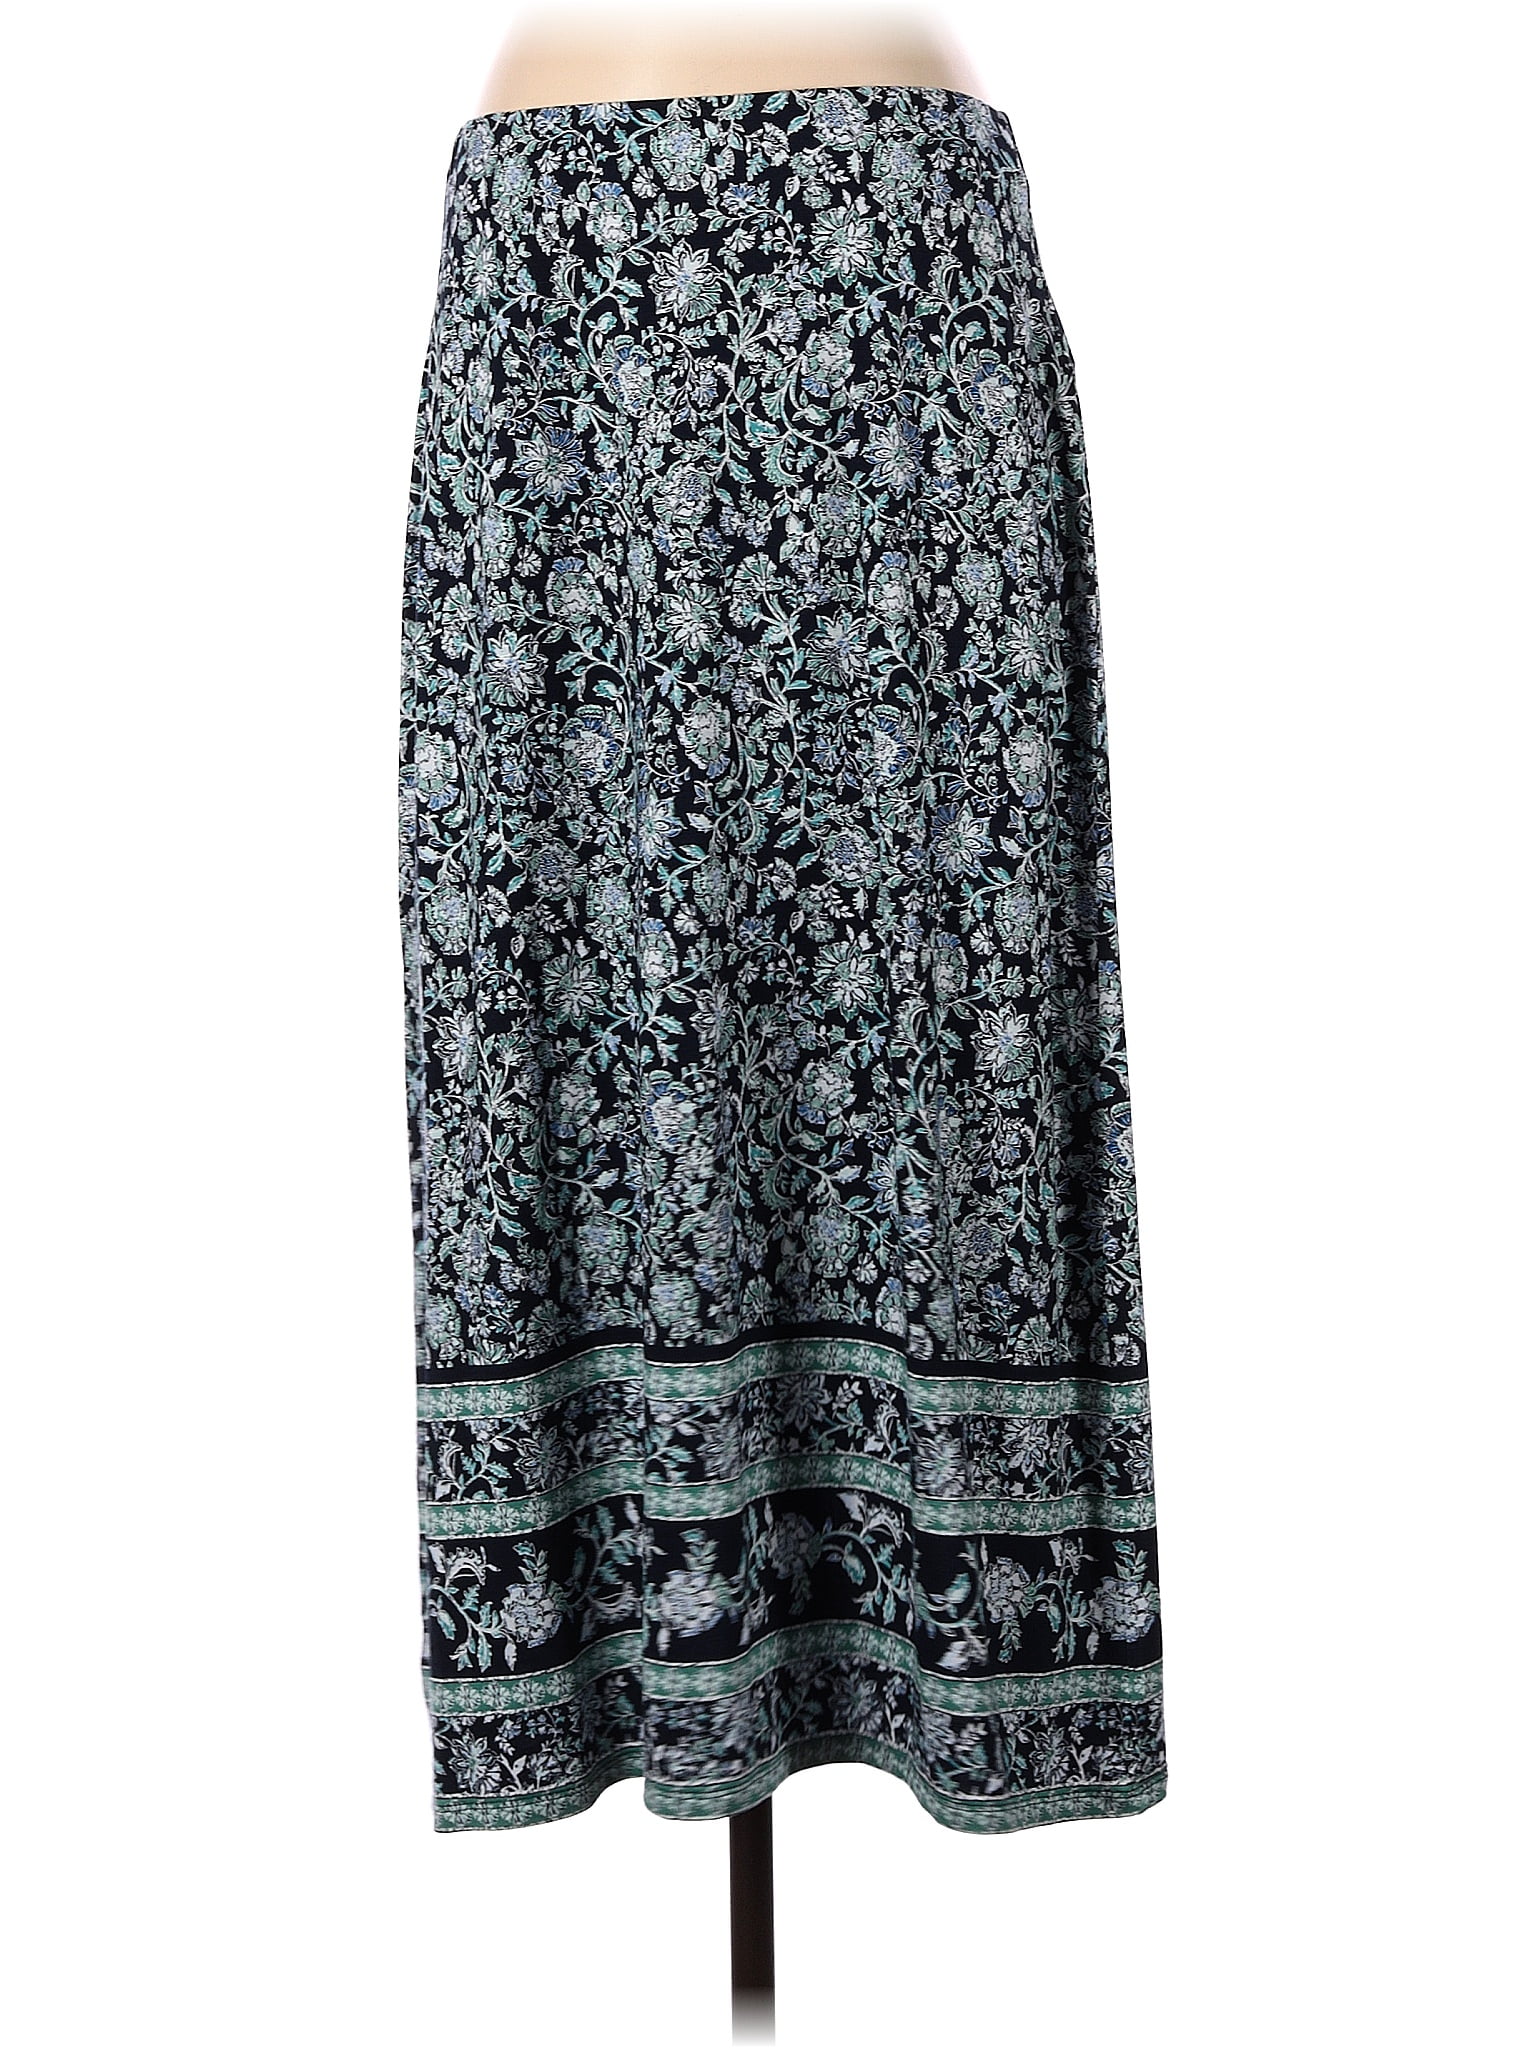 J.Jill Teal Casual Skirt Size S (Petite) - 68% off | ThredUp